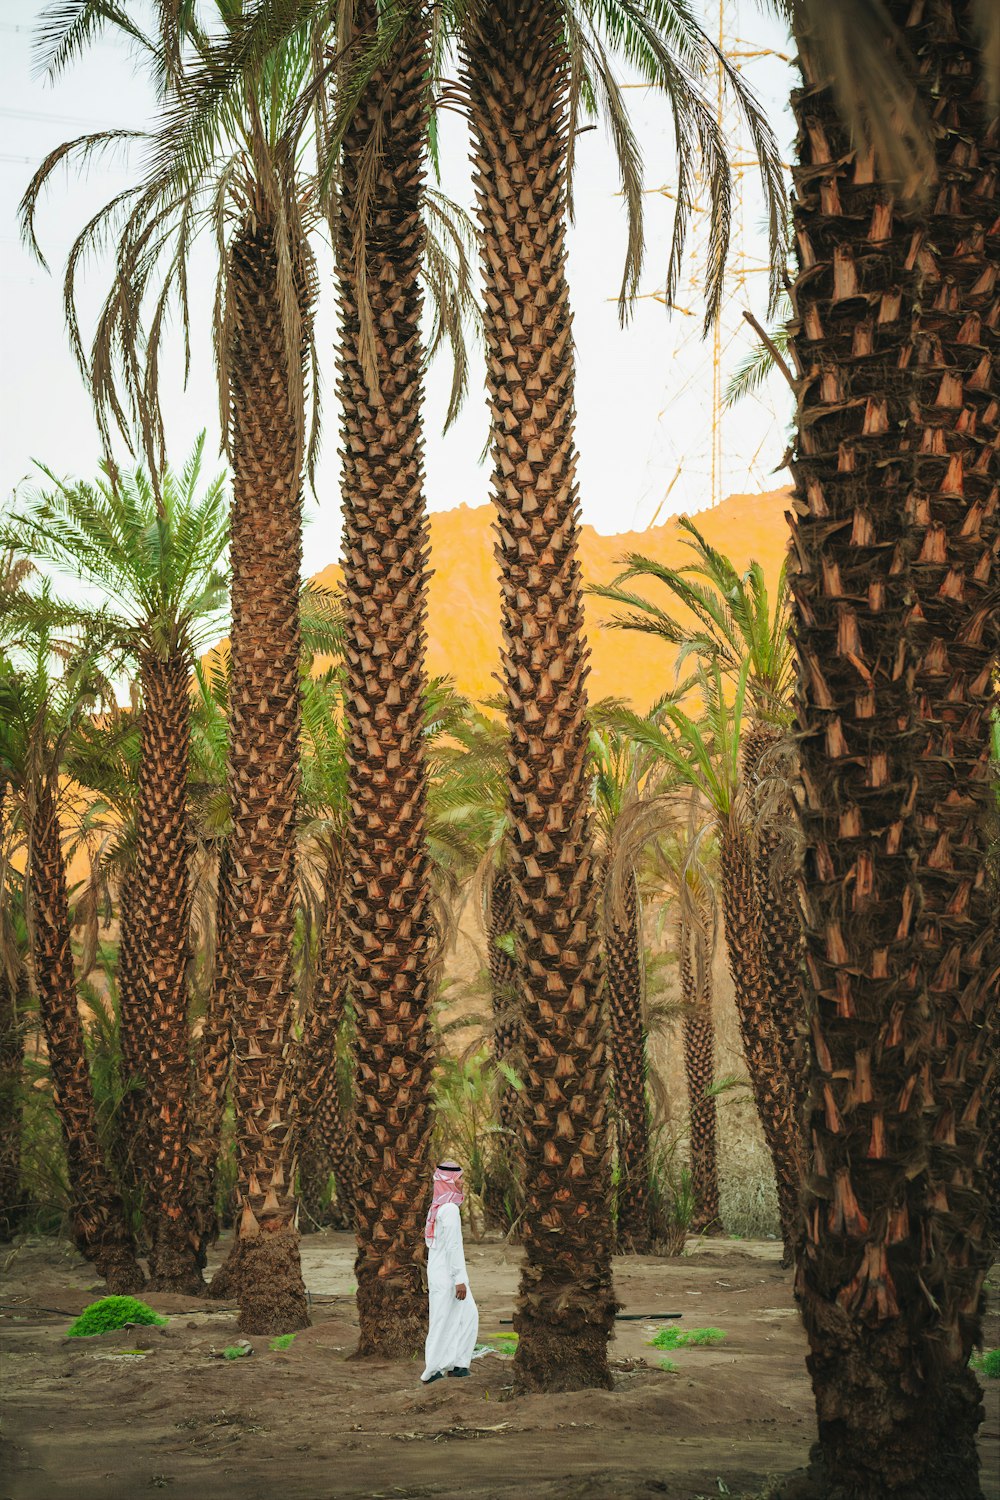 a man standing between palm trees in a desert